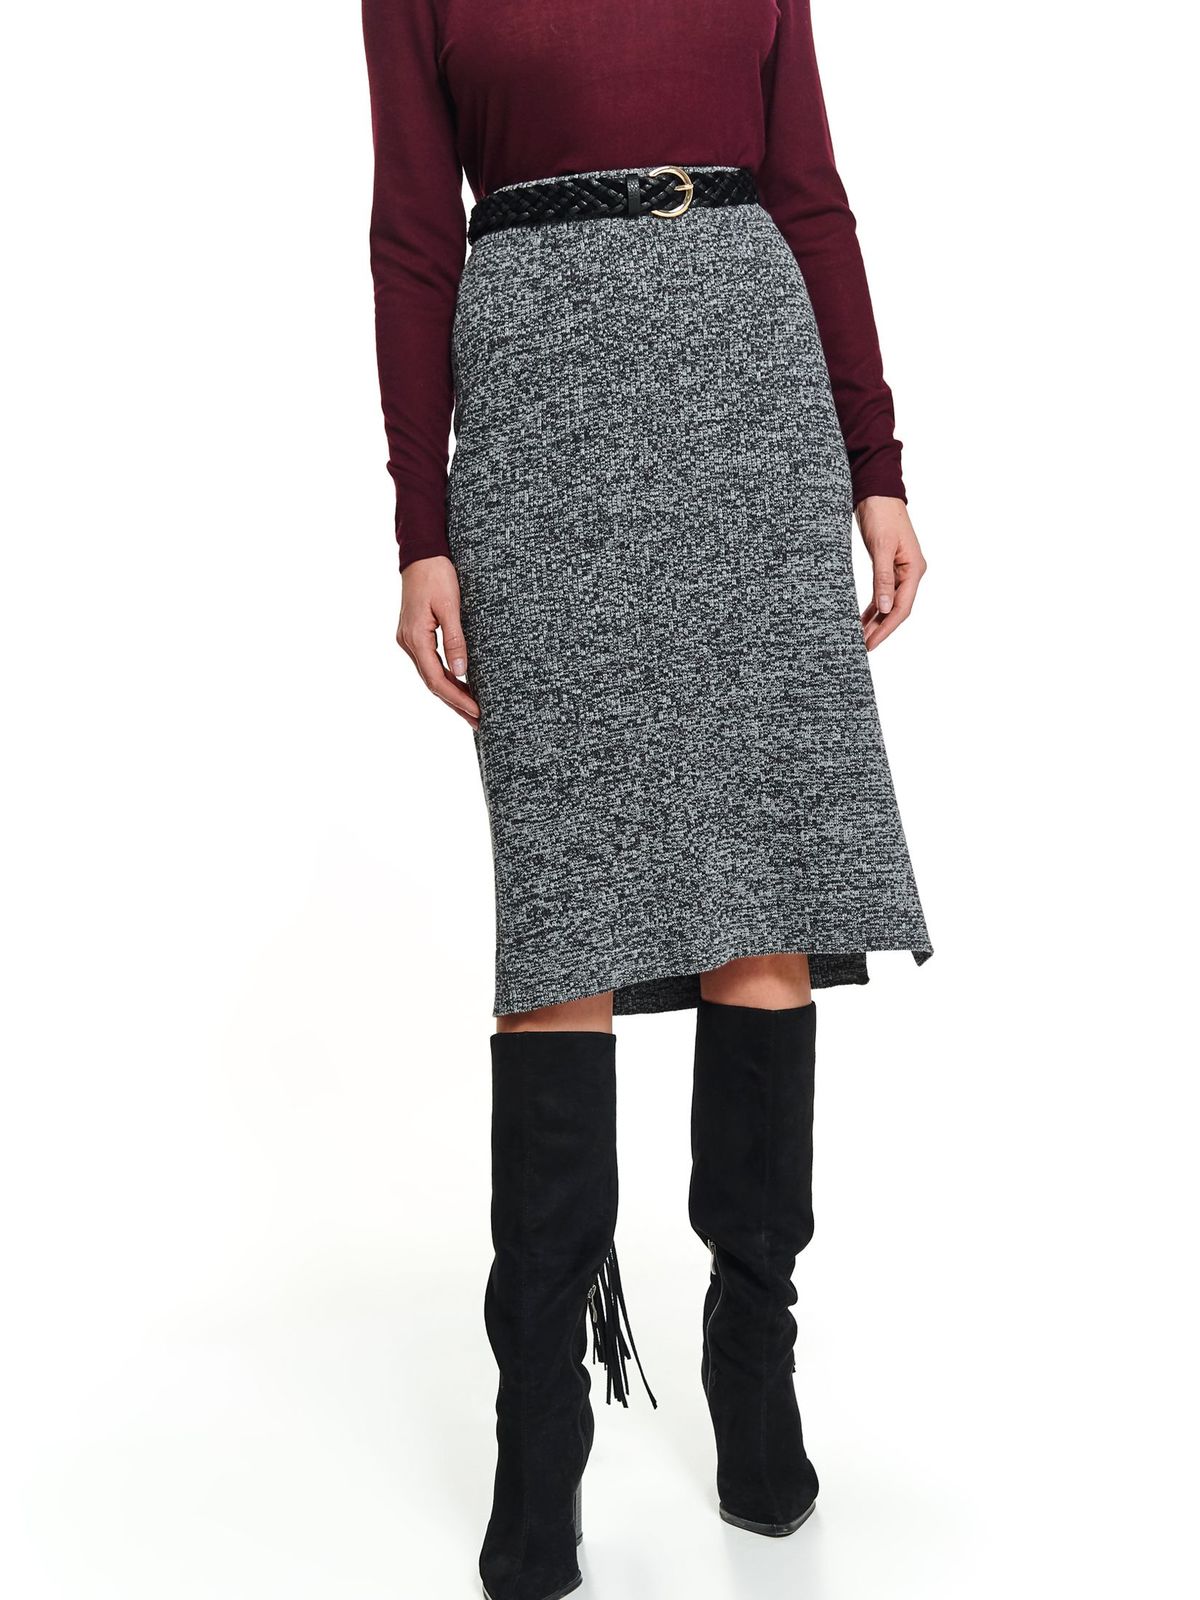 Grey skirt knitted fabric midi high waisted